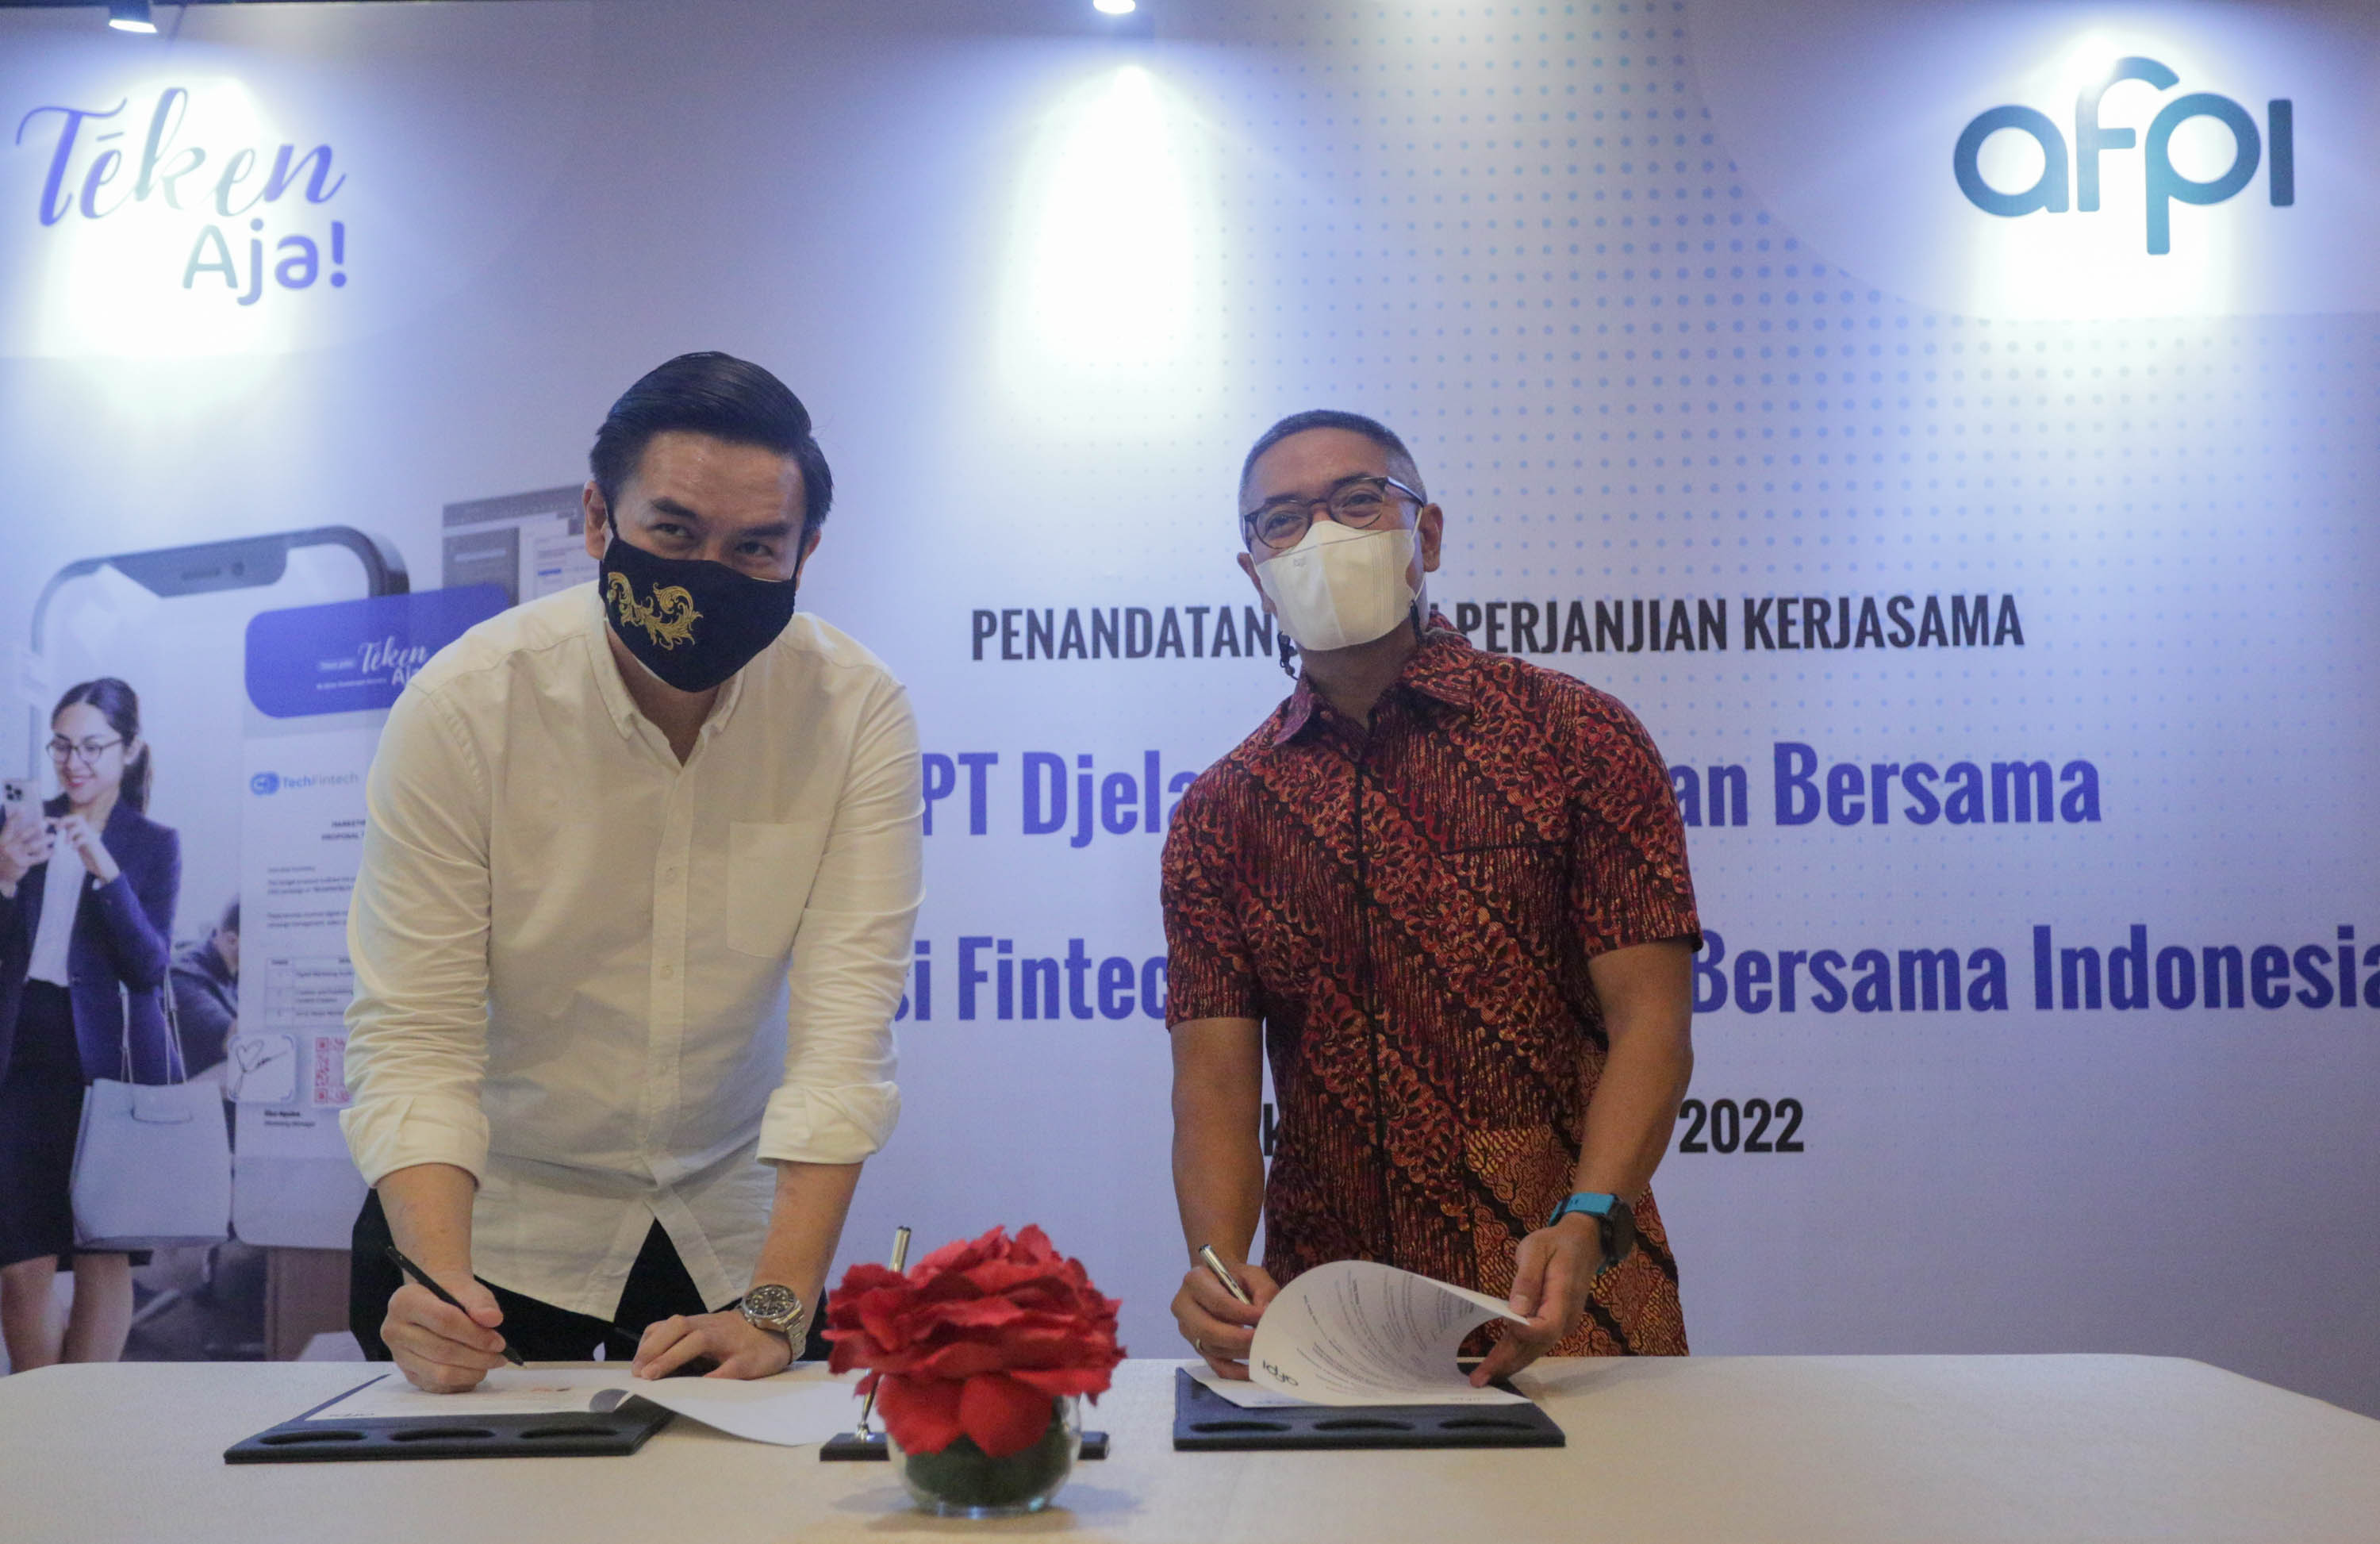 Ketua Umum Asosiasi Fintech Pendanaan Bersama Indonesia (AFPI) Adrian Gunadi (kanan), dan CEO TékenAja! Alwin Jabarti K (kiri) menandatangani perjanjian kerja sama penyediaan tandatangan elektronik dan e-Meterai bagi perusahaan fintech pendanaan anggota AFPI untuk menciptakan ekosistem fintech lending yang aman, di Jakarta, Rabu, 9 Agustus 2022. Foto: Ismail Pohan/TrenAsia